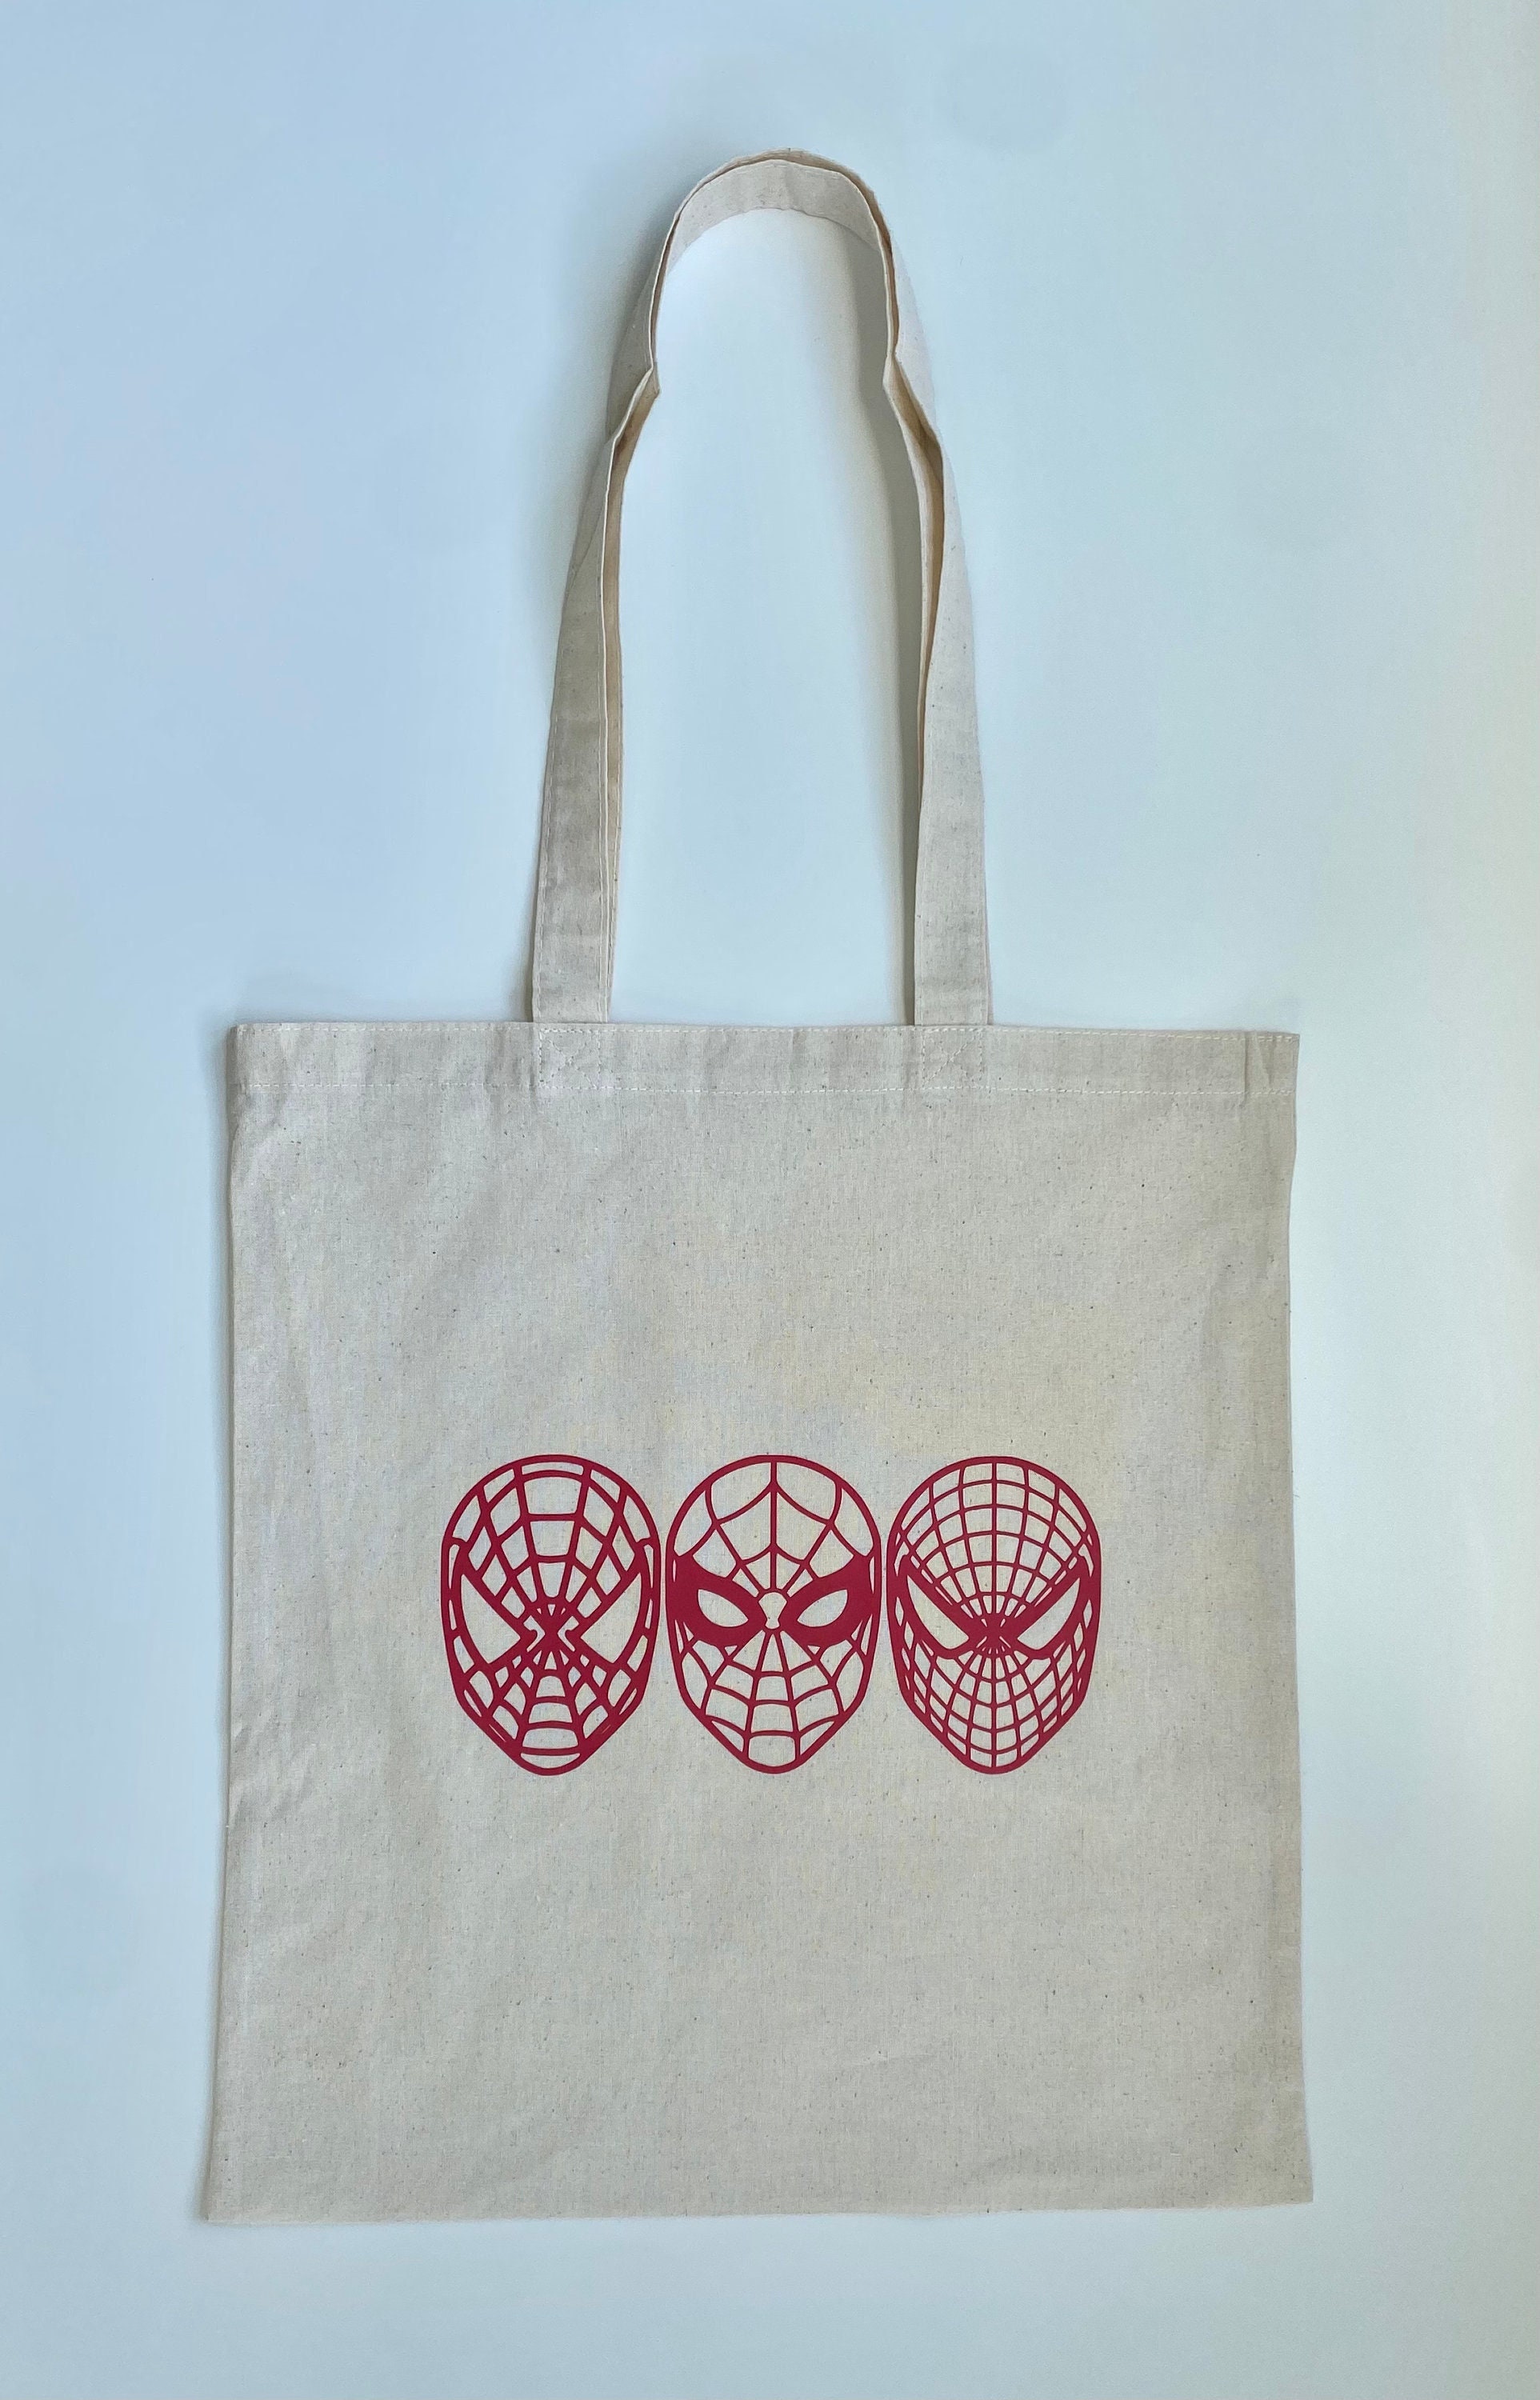 Jsdart Canvas Tote Bag Men Dude Food Reusable Masculine Reusable Handbag Shoulder Grocery Shopping Bags